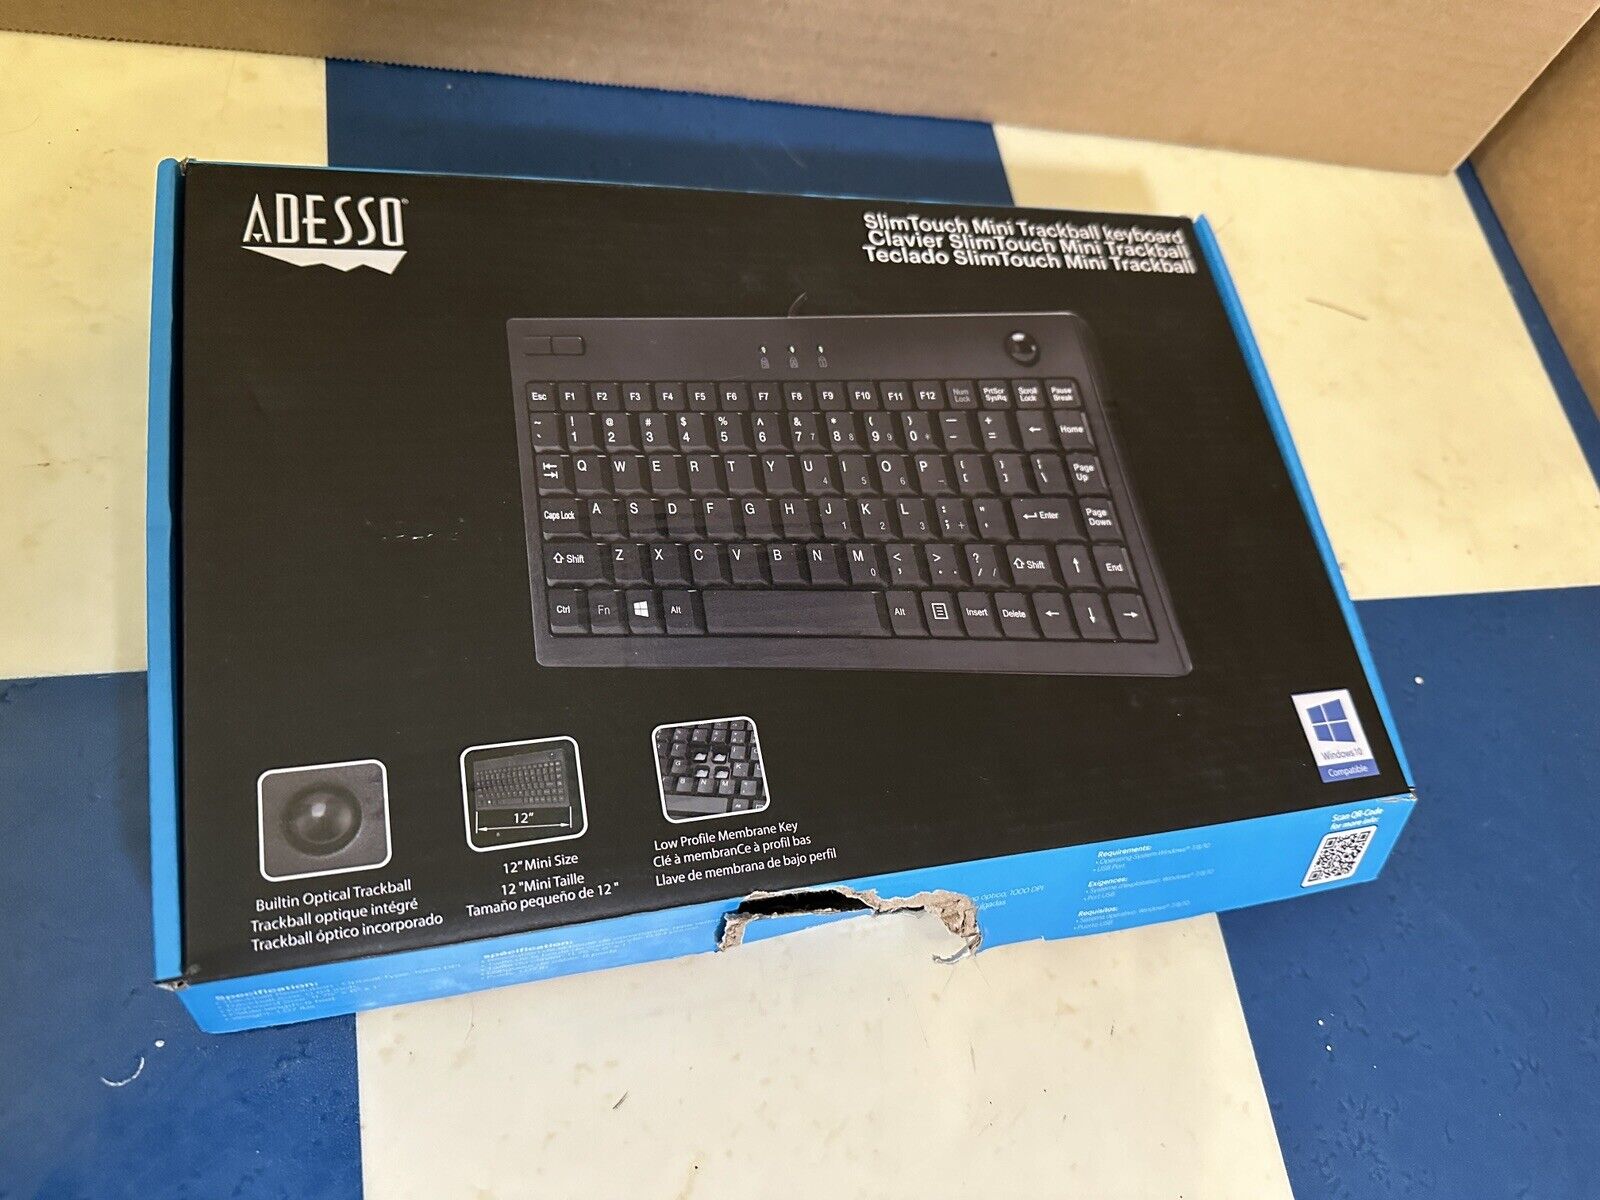 Adesso AKB-310UB - Mini Trackball USB Keyboard, Black